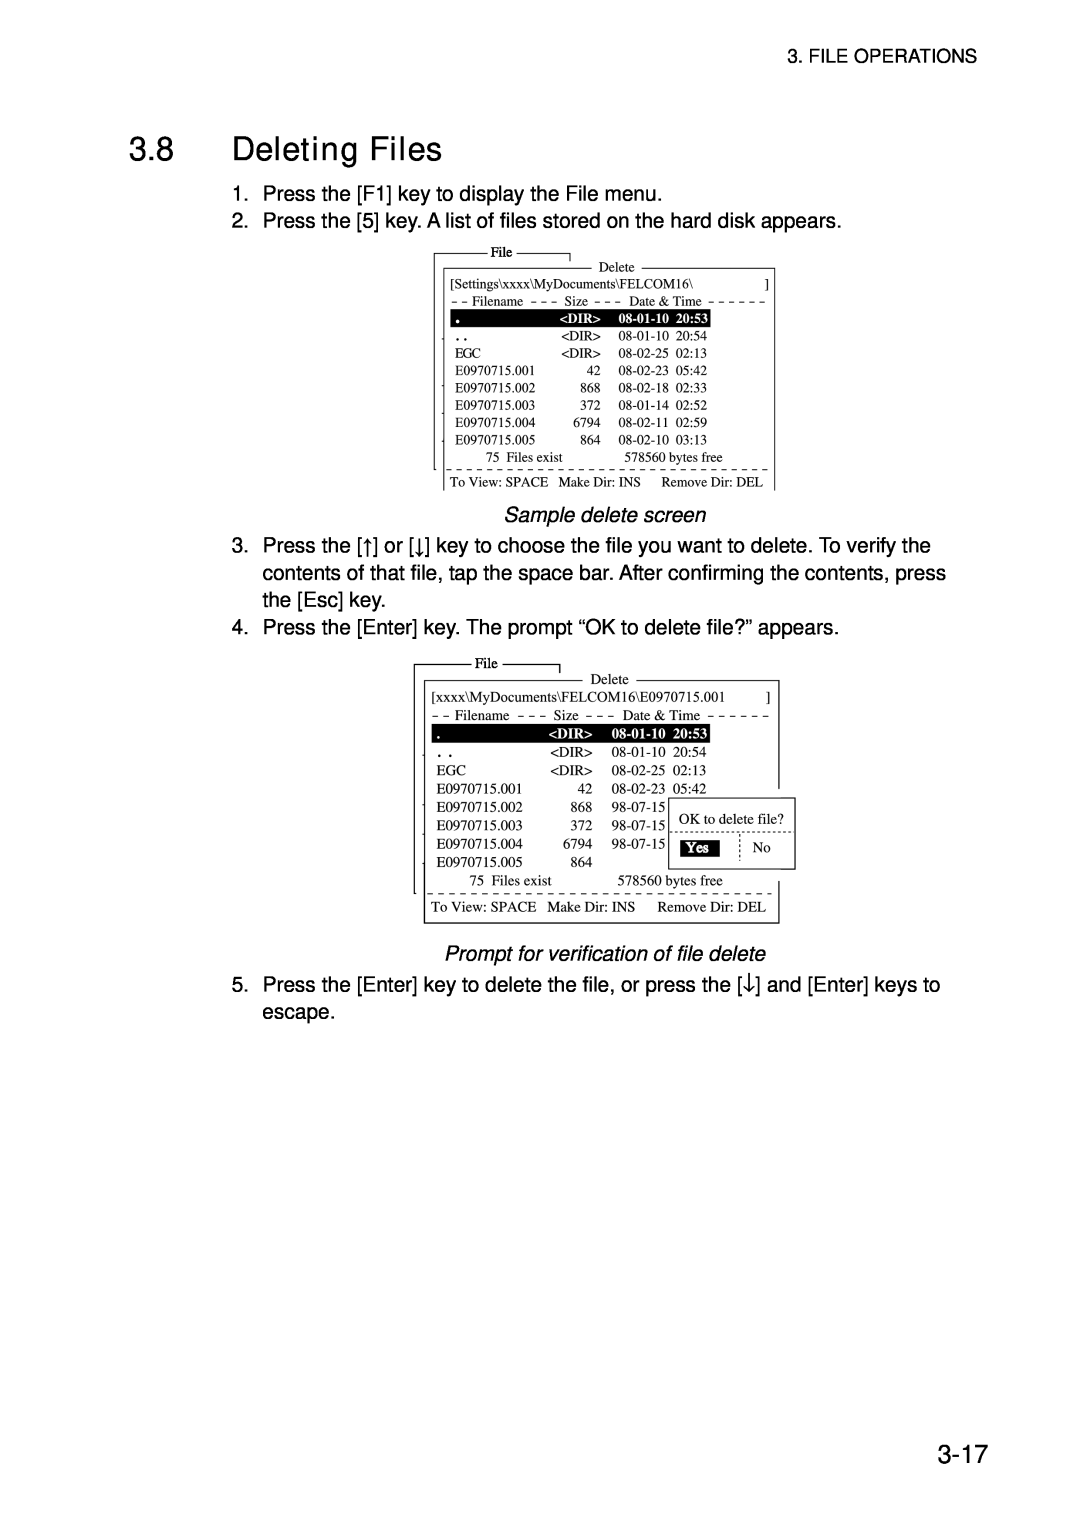 Furuno 16 manual Deleting Files, 3-17, Sample delete screen, Prompt for verification of file delete 